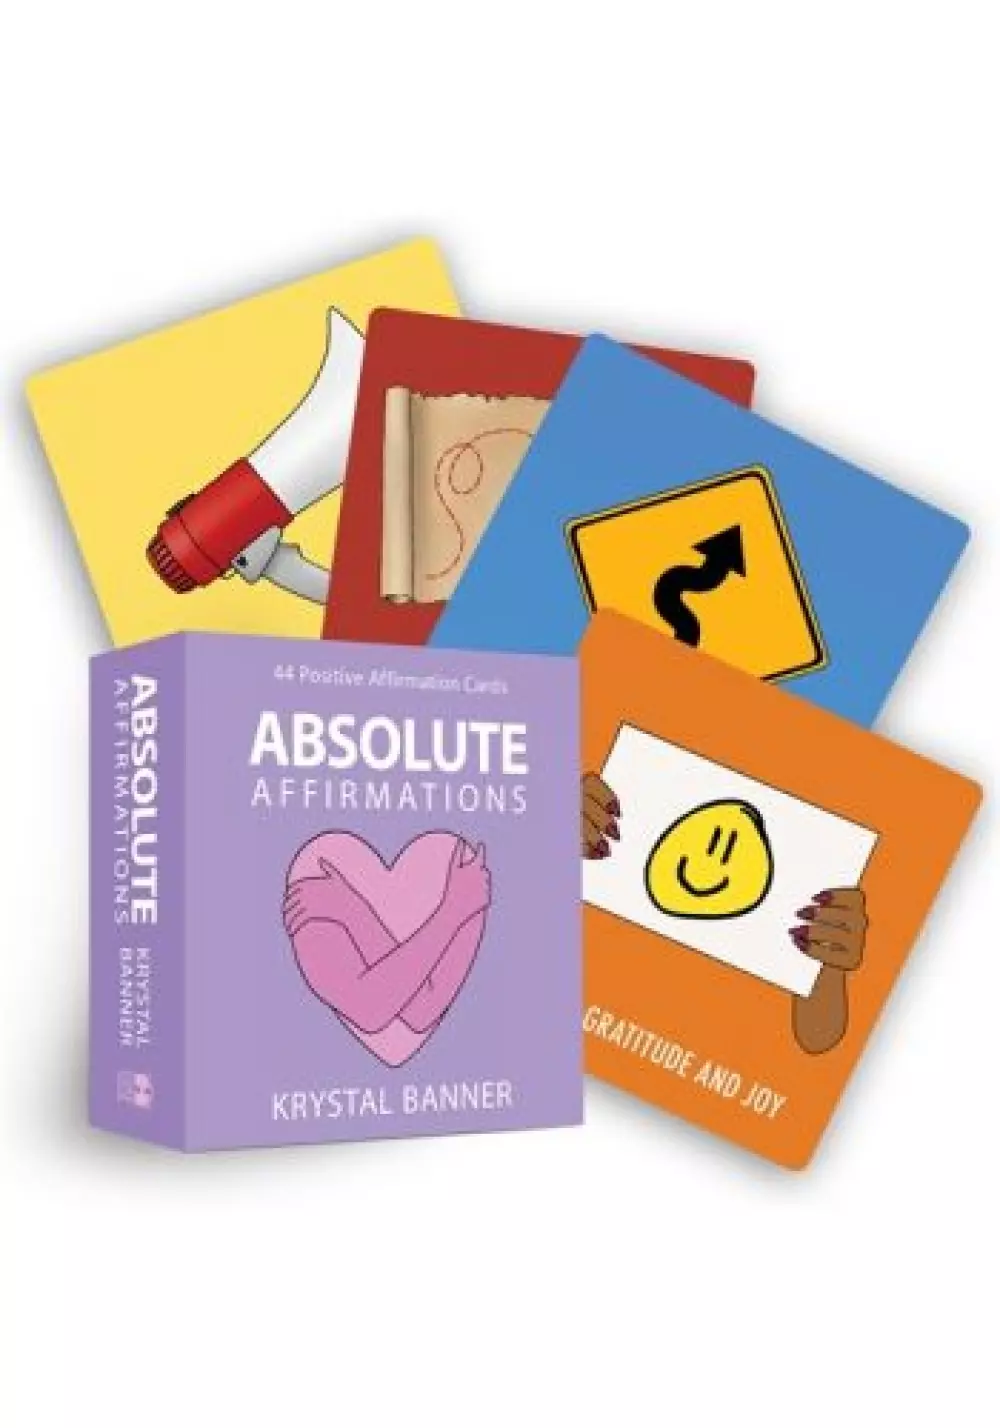 Absolute Affirmations, Tarot & orakel, Andre kort, 44 Positive Affirmation Cards